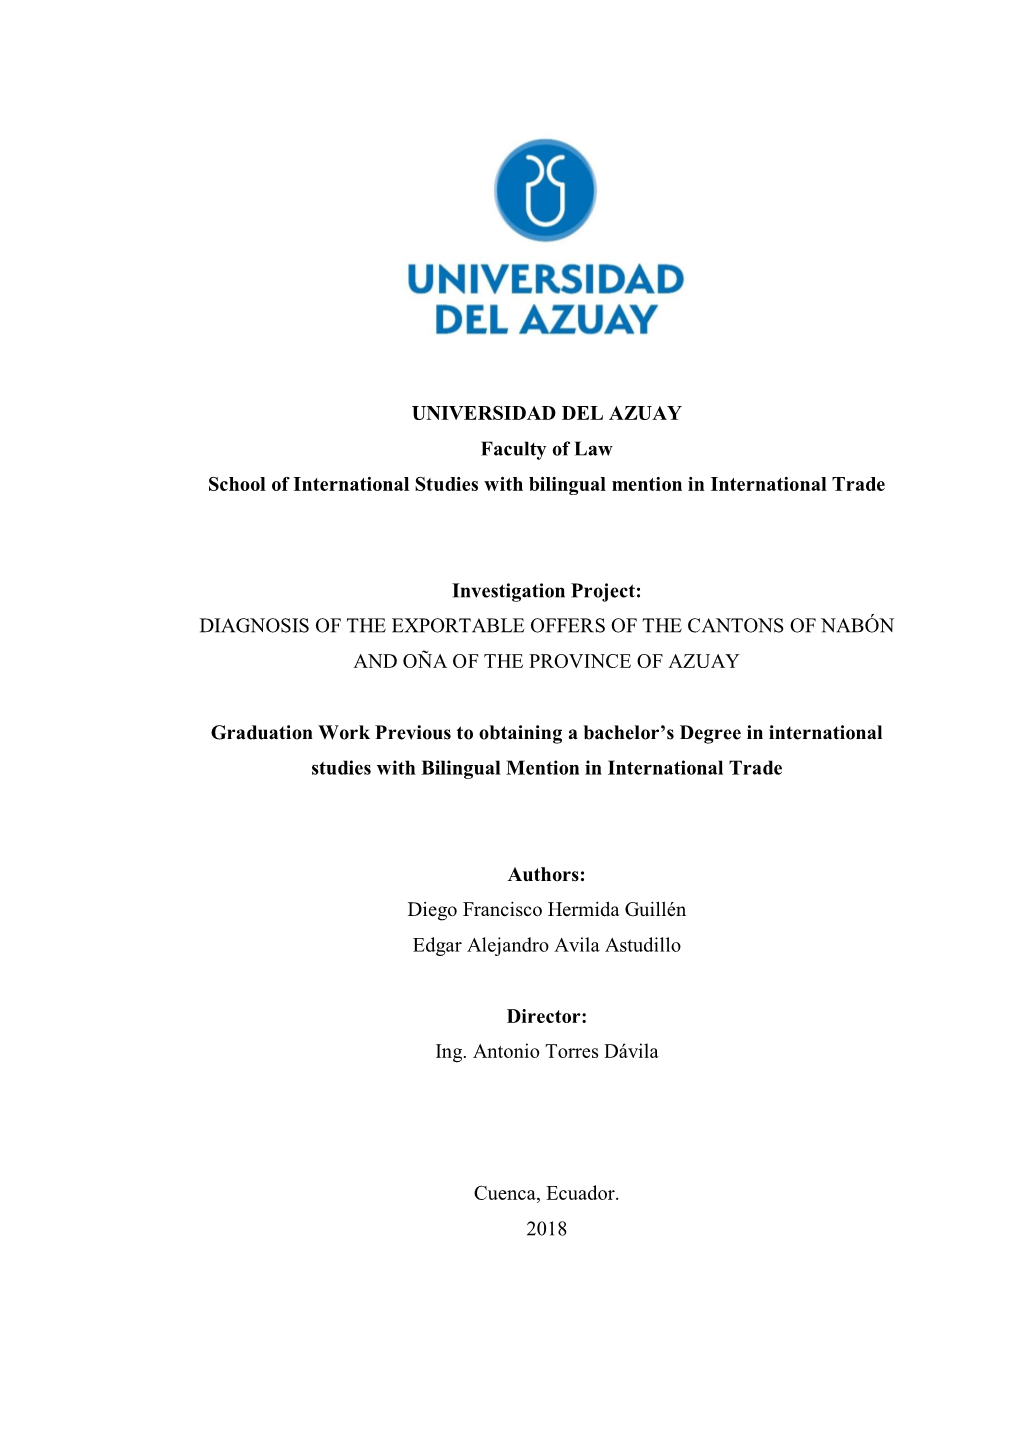 UNIVERSIDAD DEL AZUAY Faculty of Law School of International Studies with Bilingual Mention in International Trade